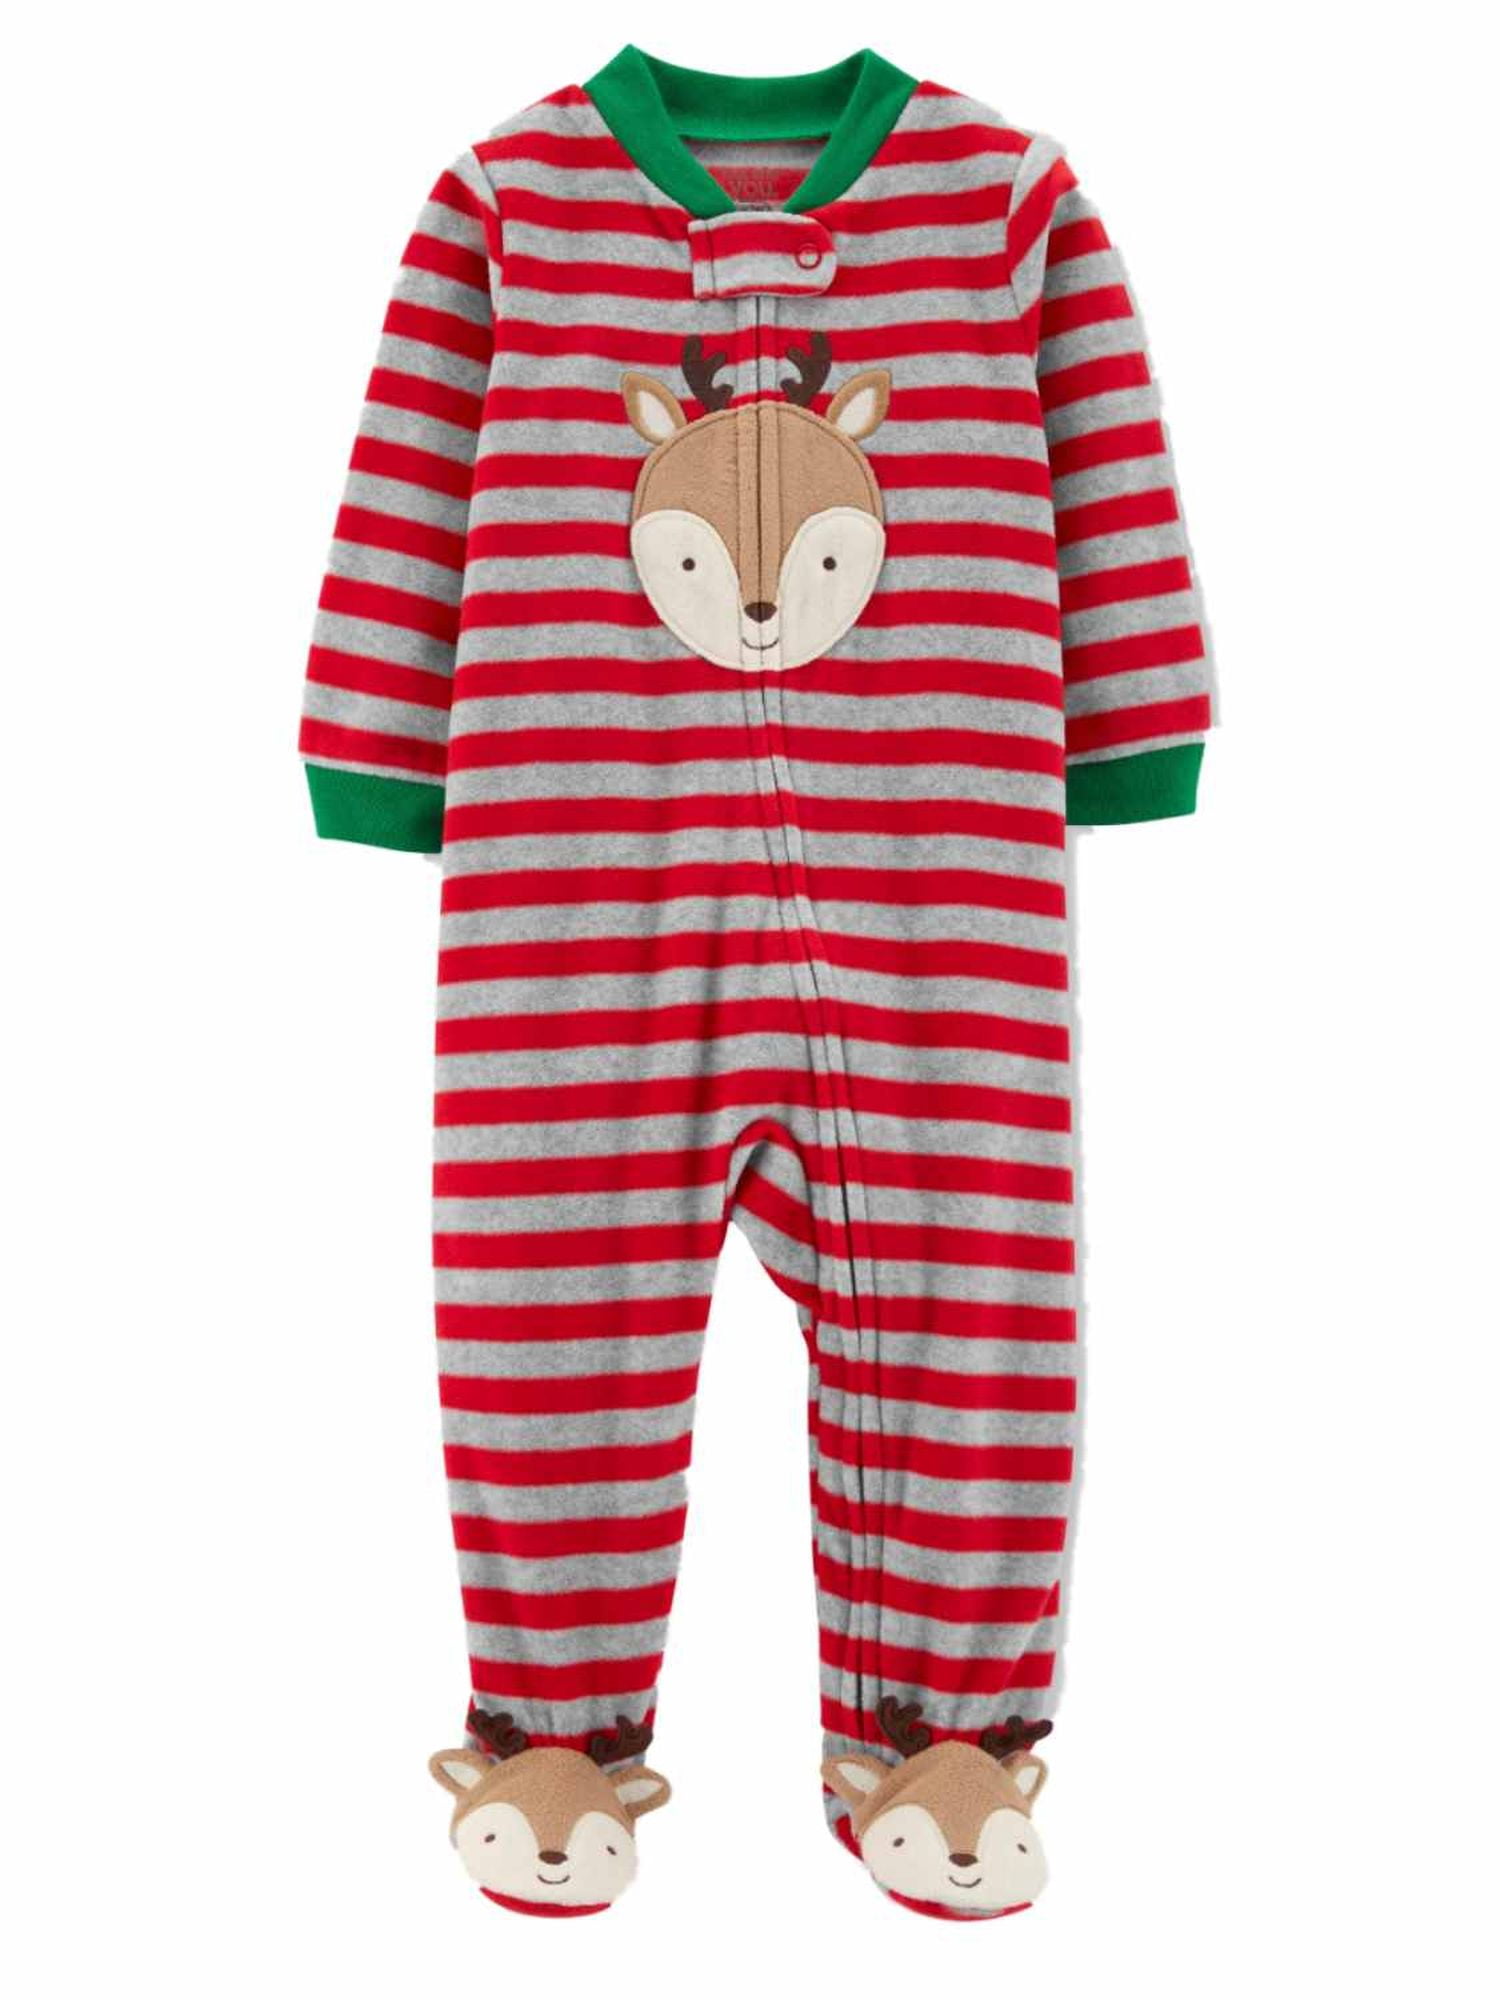 Carters Infant Boys Red Stripe Reindeer Christmas Sleeper Holiday Pajamas